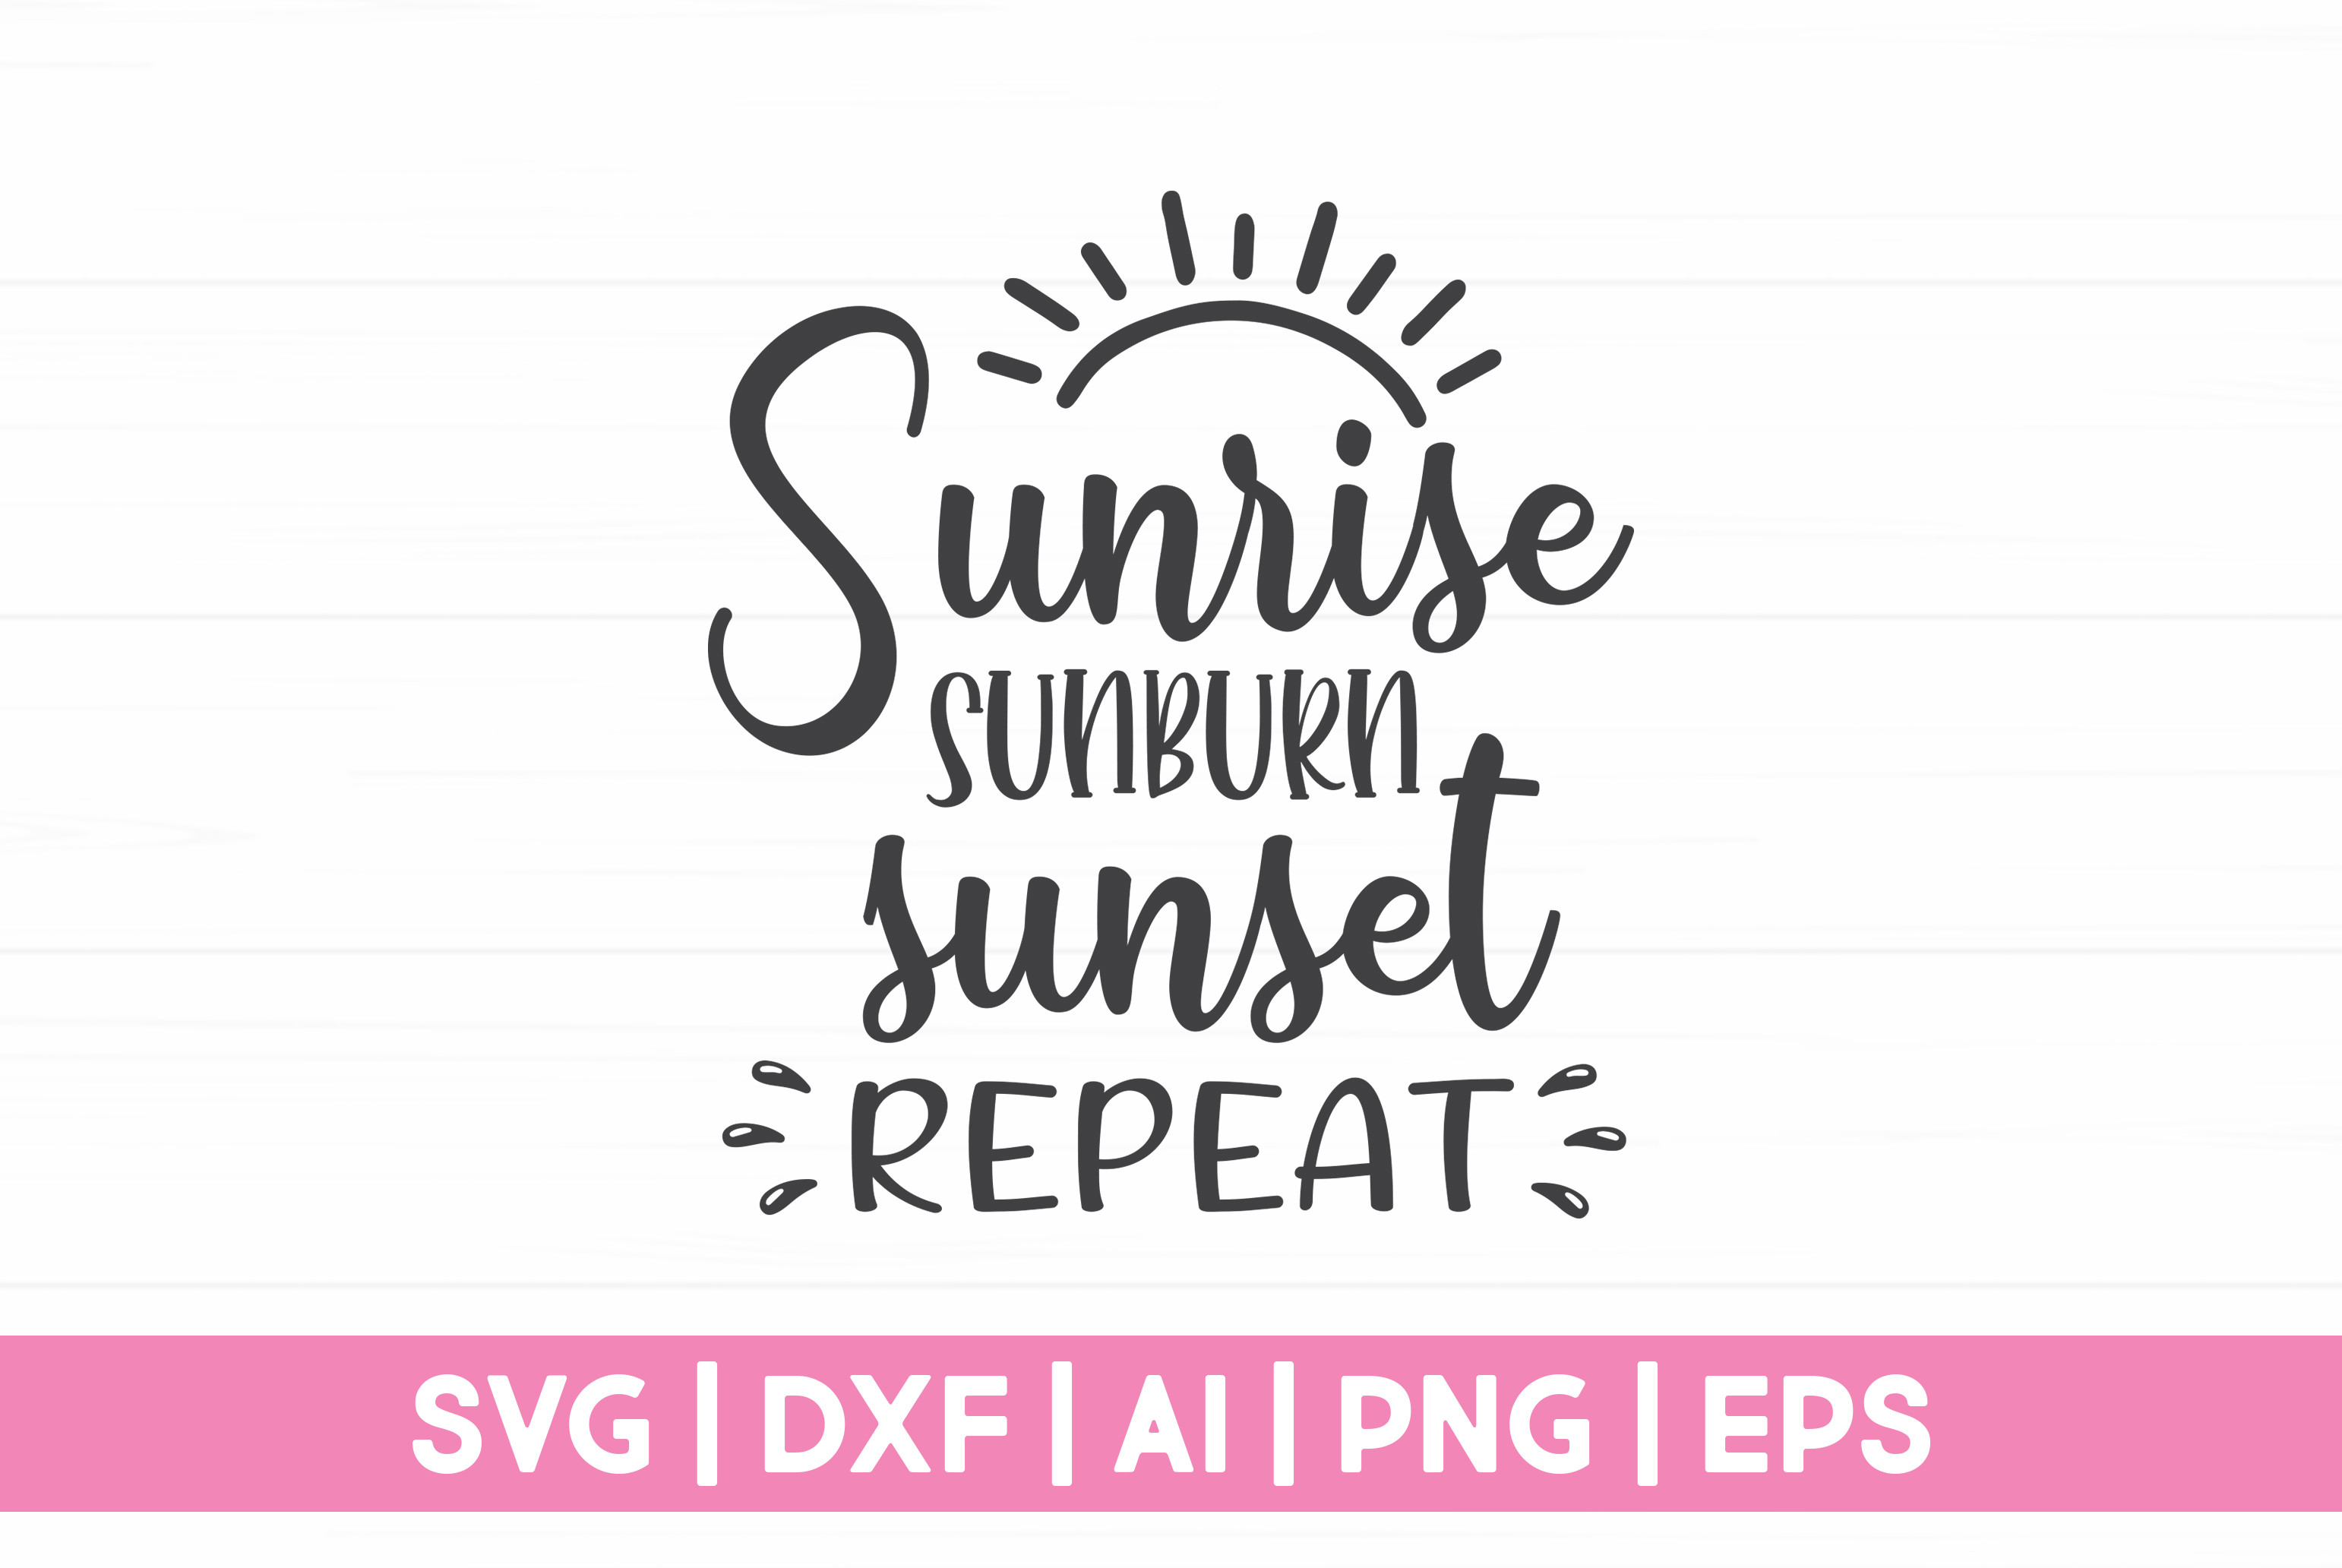 Sunrise Sunburn Sunset Repeat Svg File Graphic By Craftartsvg